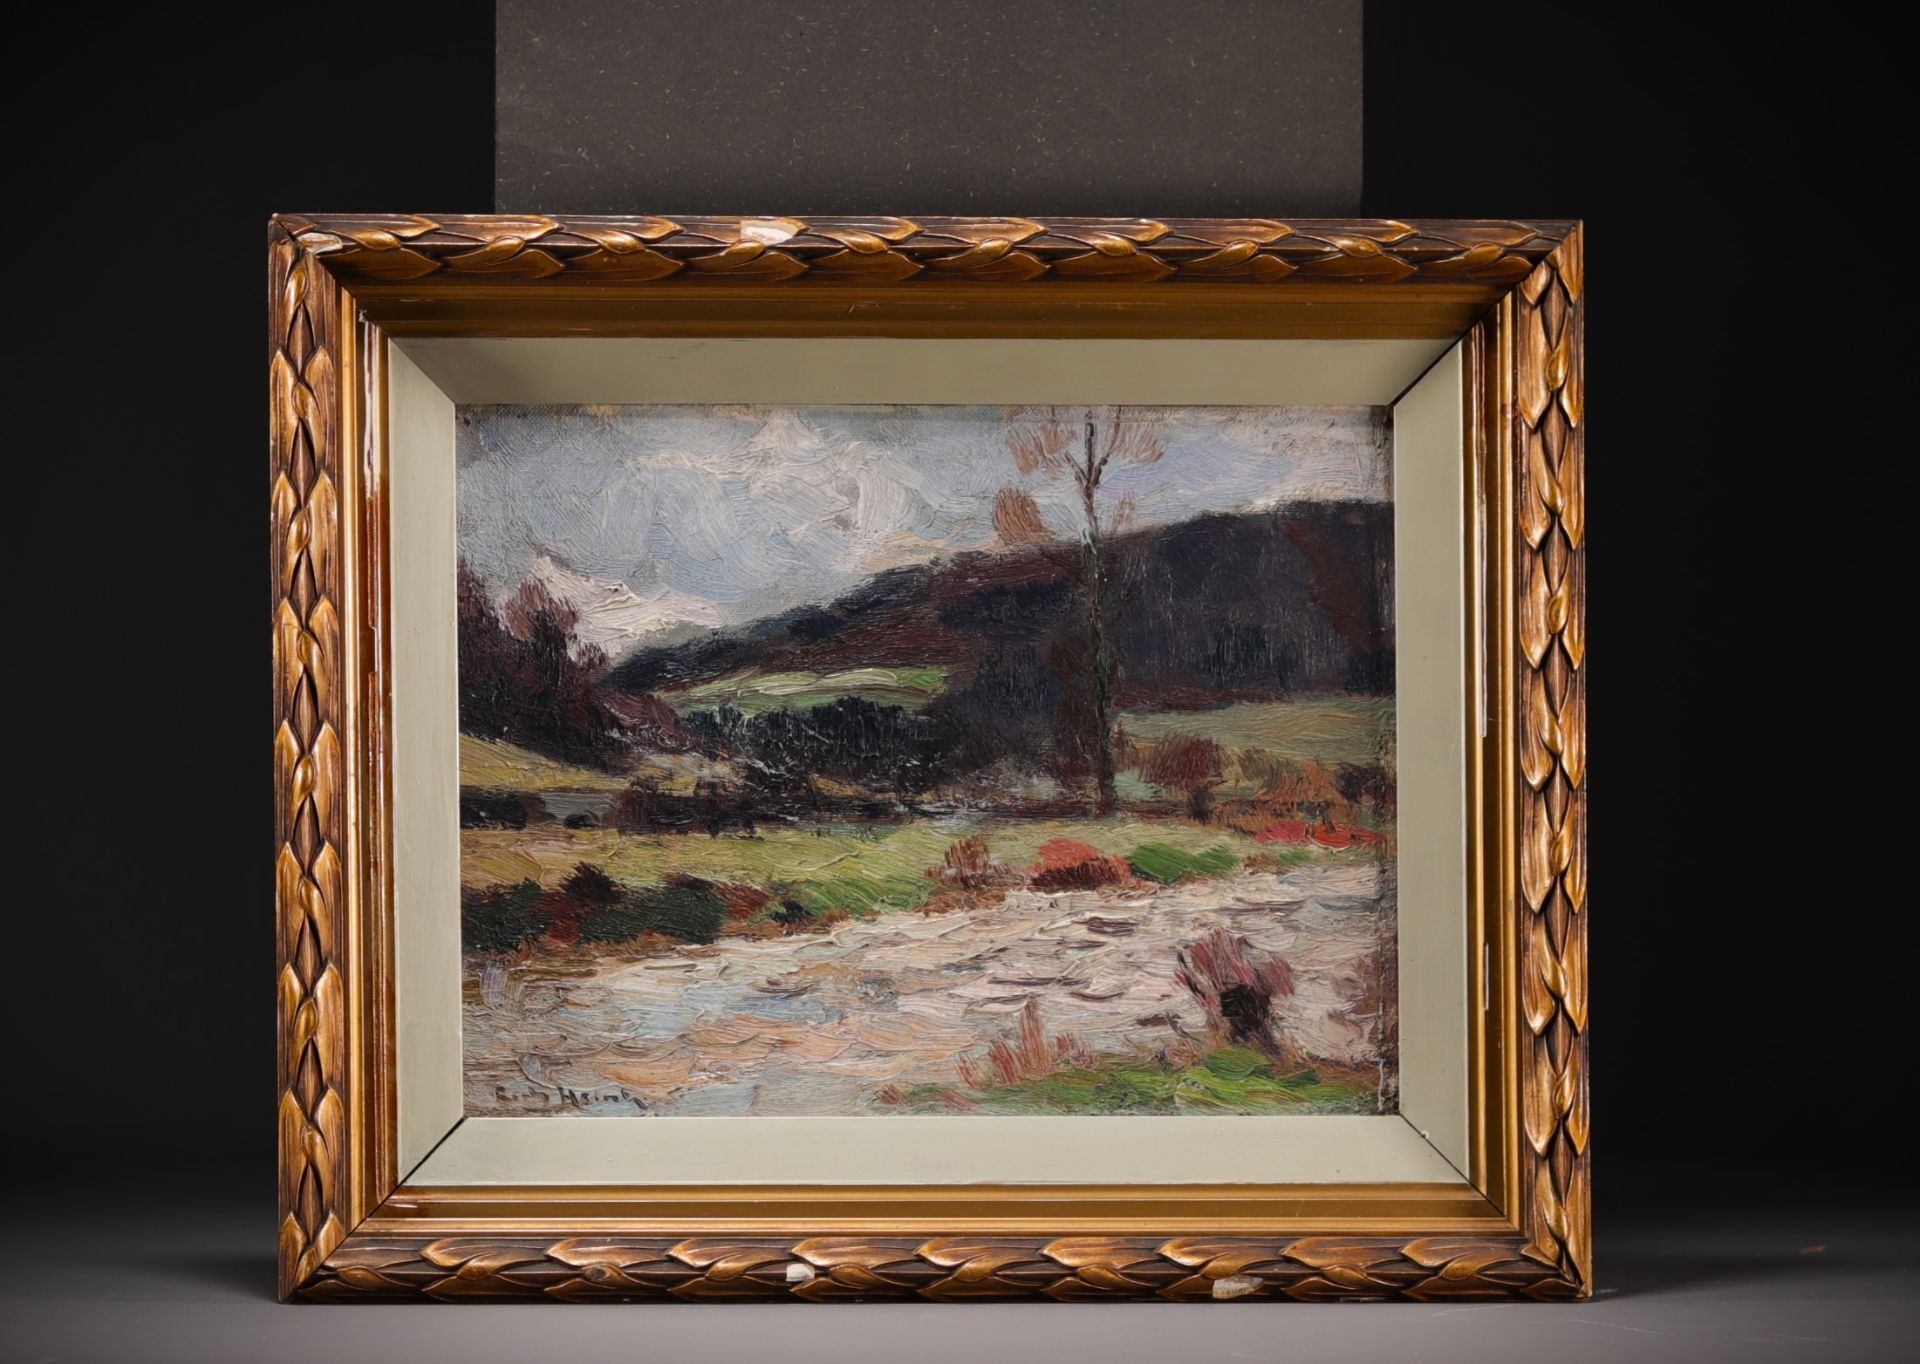 Richard HEINTZ (1871-1929) "Landscape and river" Oil on canvas. - Image 2 of 2